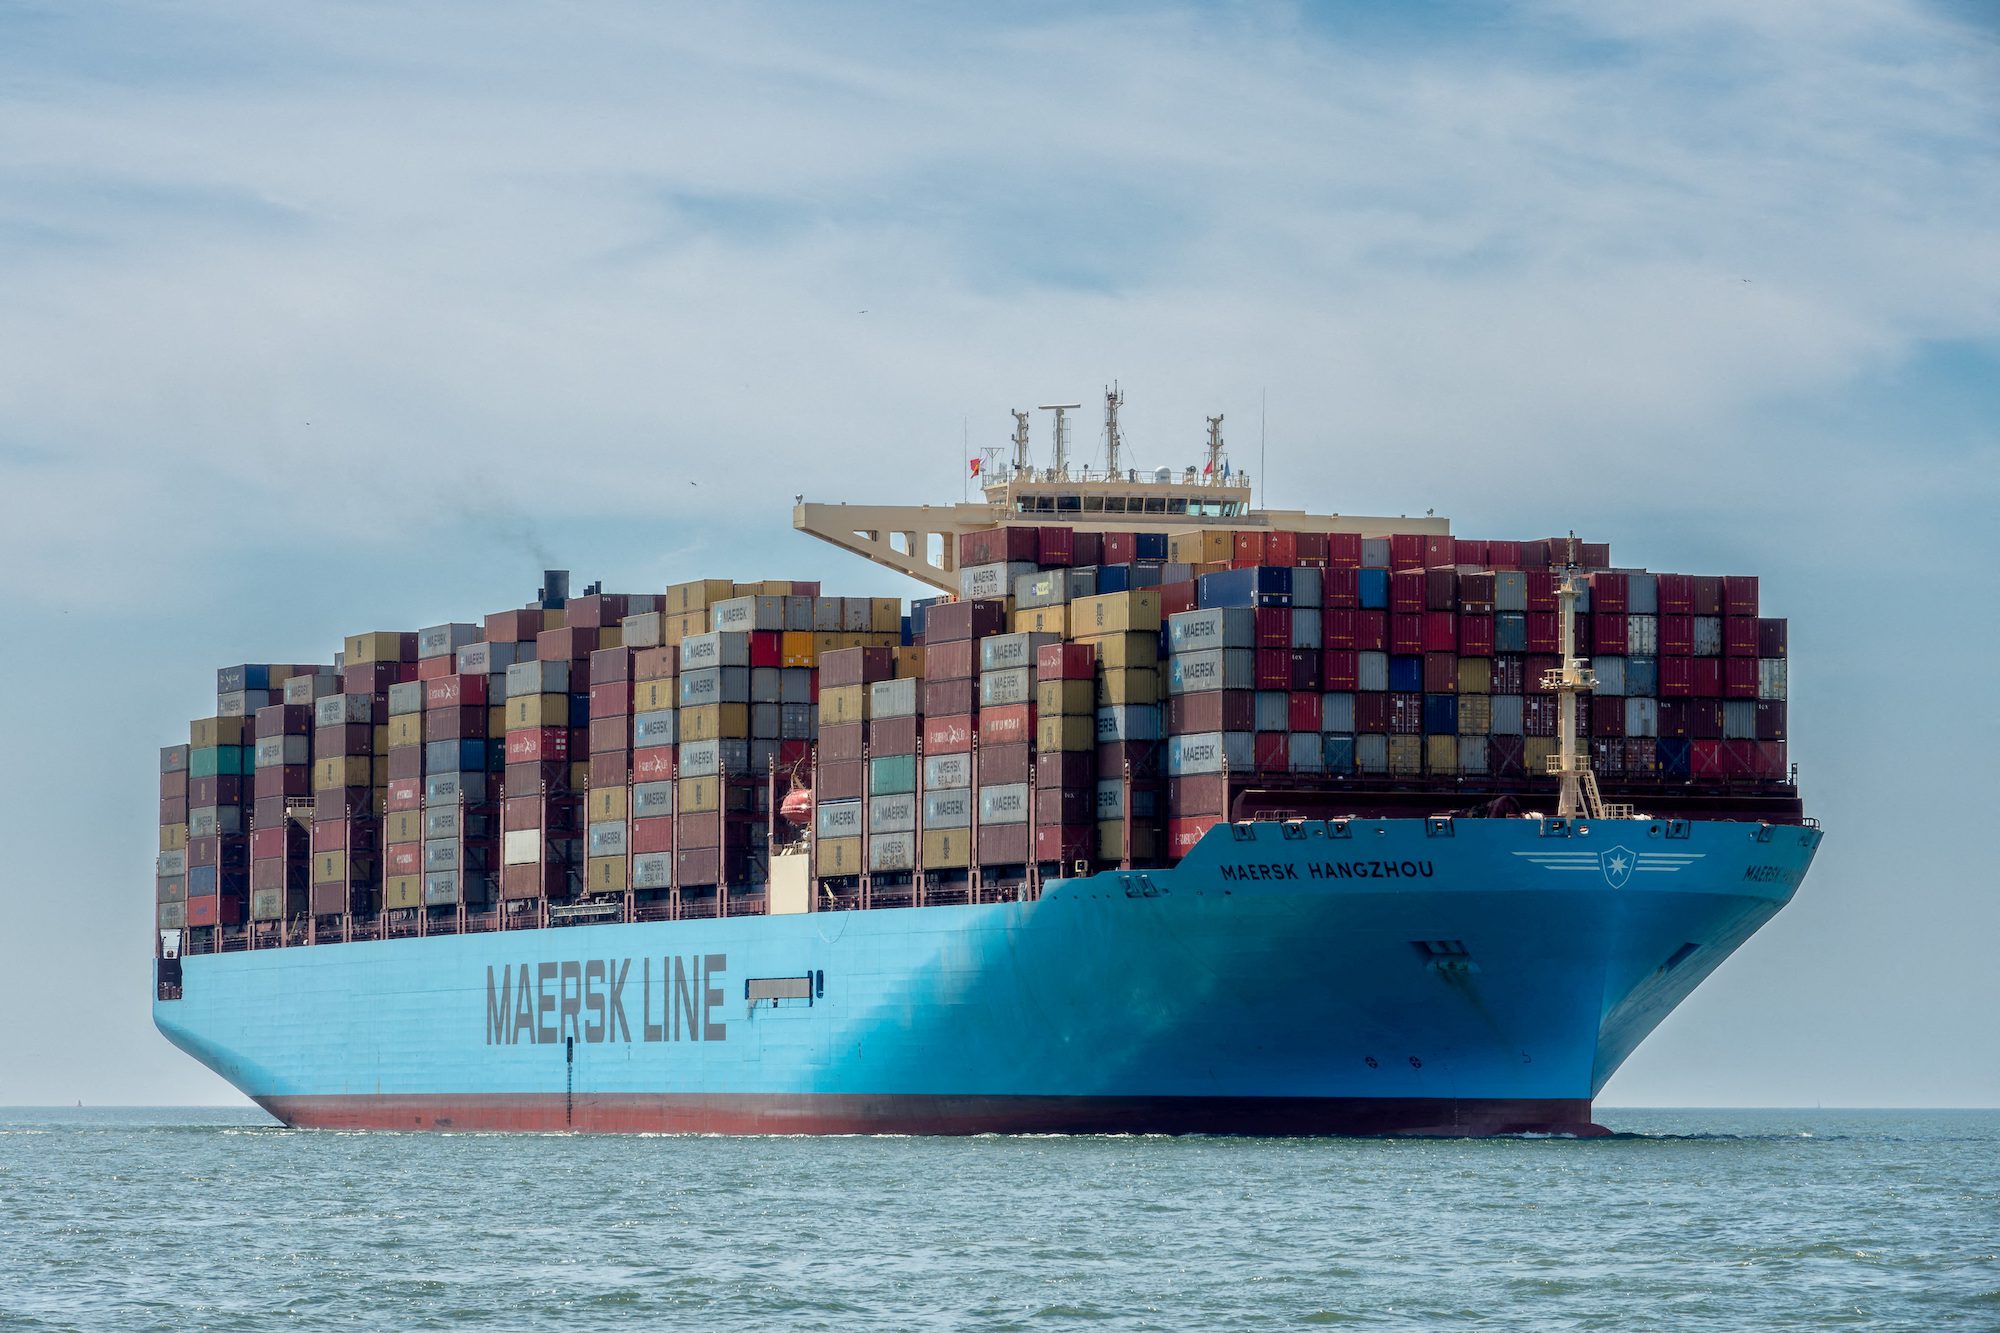 FILE PHOTO: Container vessel Maersk Hangzhou sails in the Wielingen channel, Westerschelde, Netherlands, July 15, 2018. Rene van Quekelberghe/Handout via REUTERS/File Photo